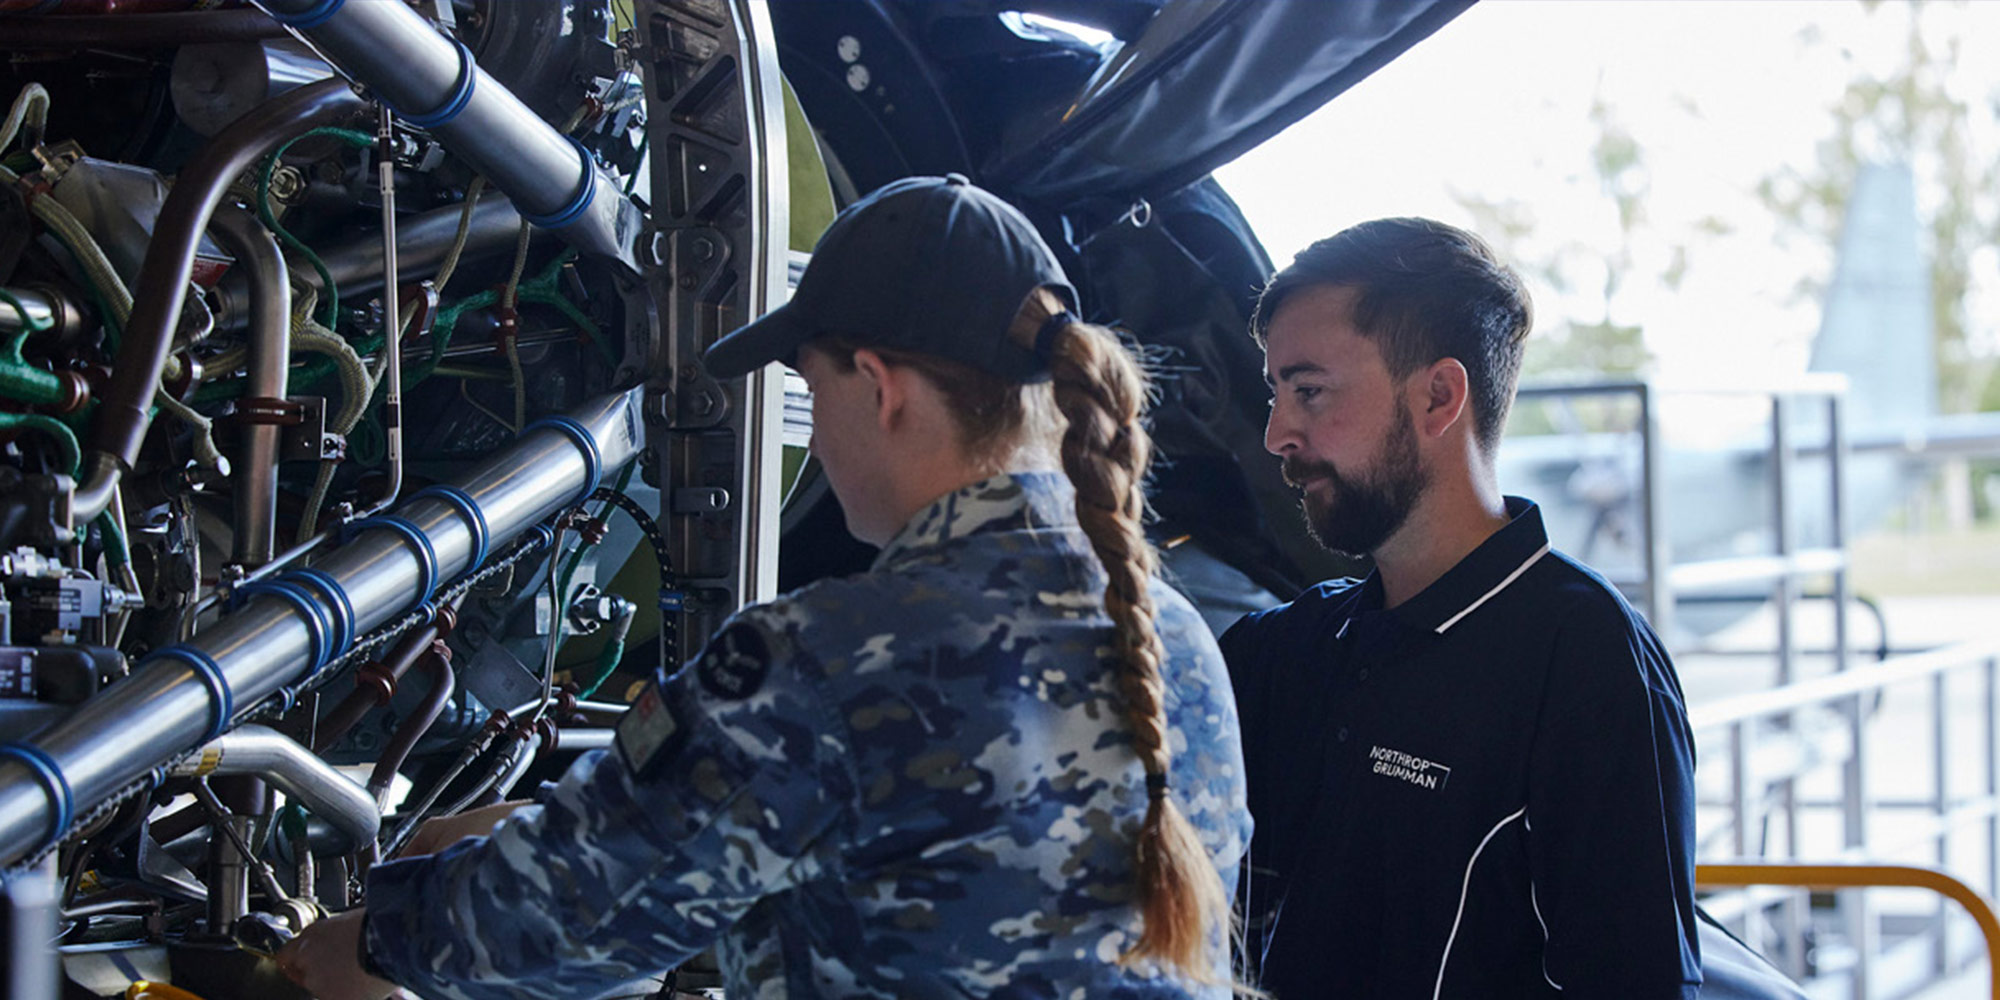 Northrop Grumman Australia male employee working with female teammate on military aircraft